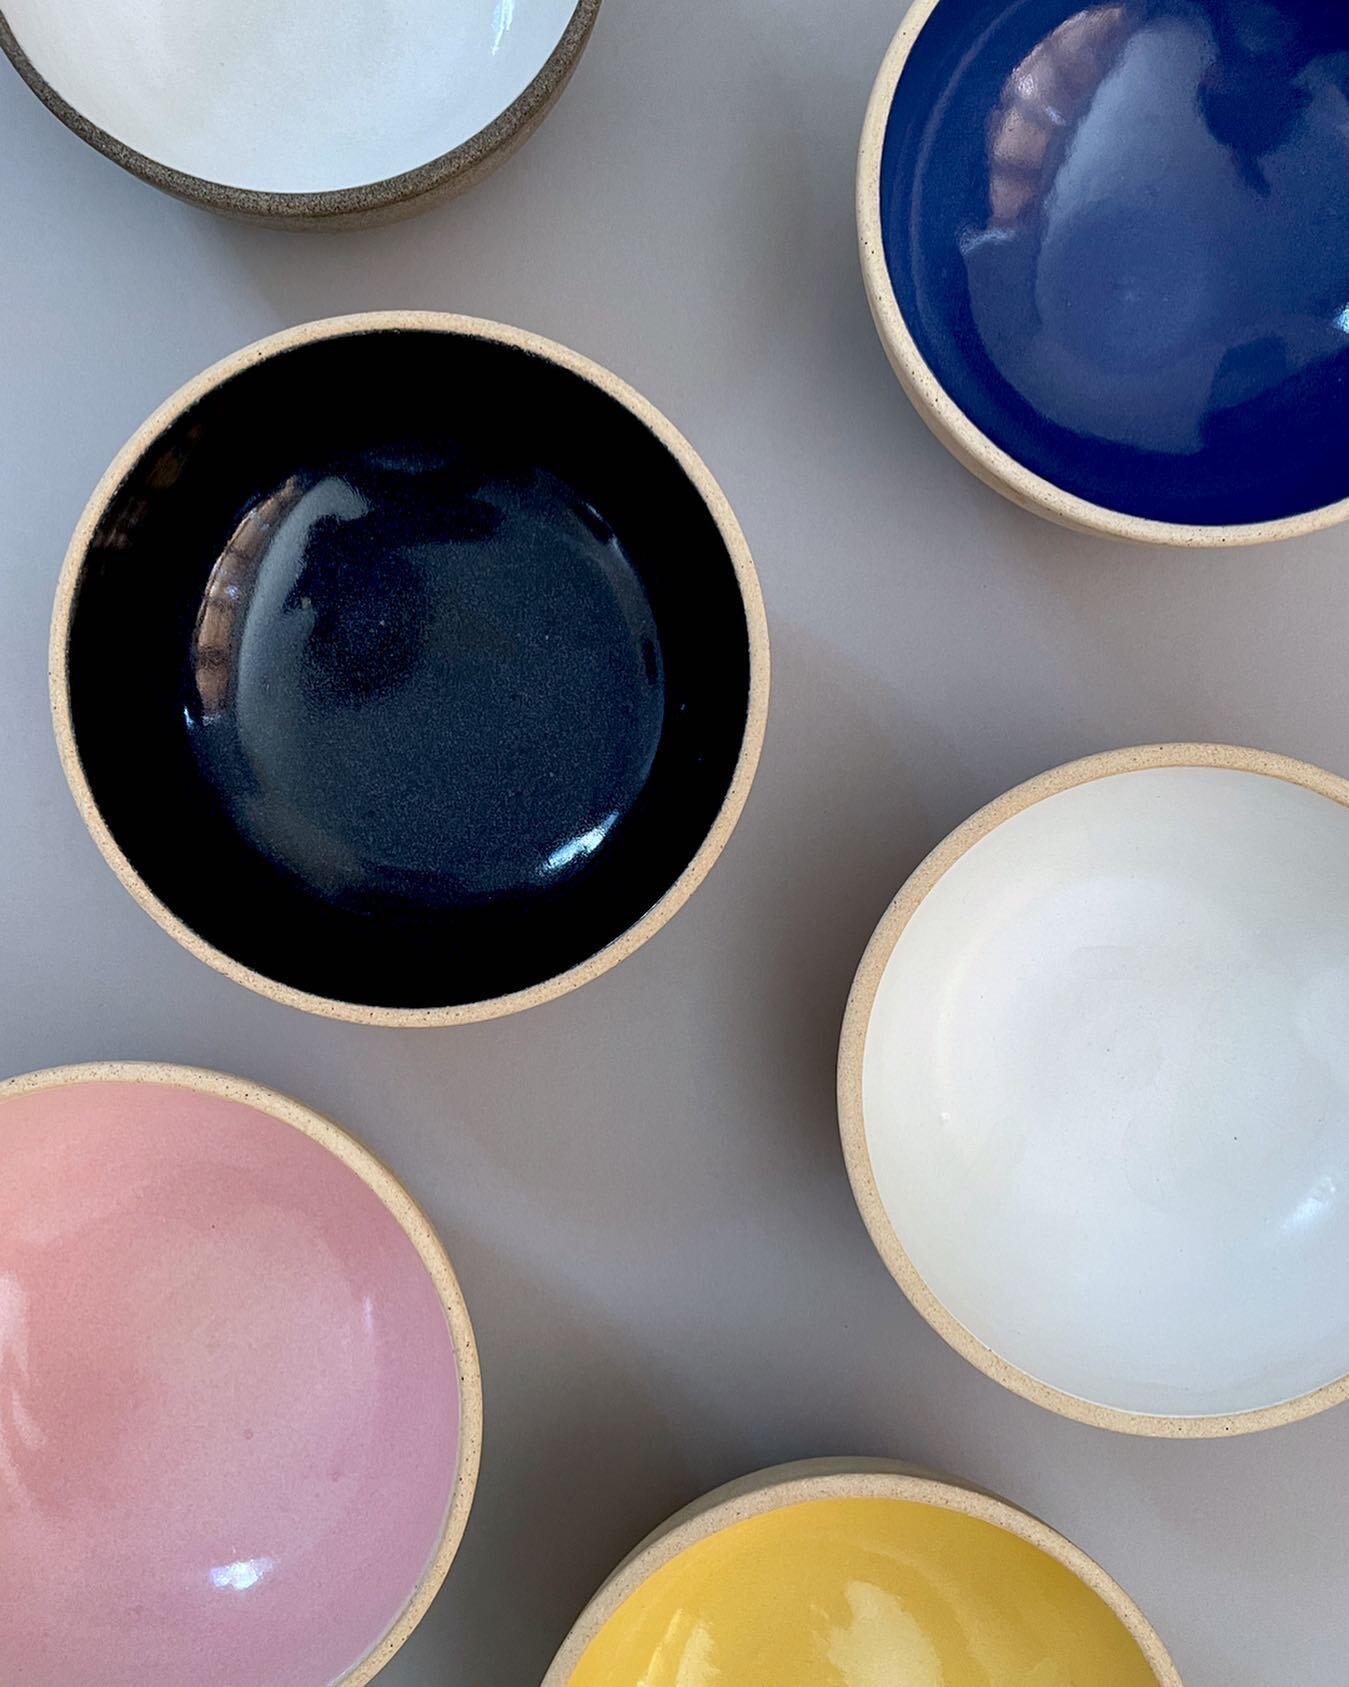 Bowls for ice-cream on days like this 🥵
.
.
.
#ihavethisthingwithceramics #loveceramic #ceramic #keramic #ceramicdesign
#clay #contemporaryceramics #modernceramics #handmadeceramics #wheelthrown #handthrown #keramic
#handcrafted #stoneware #londonce